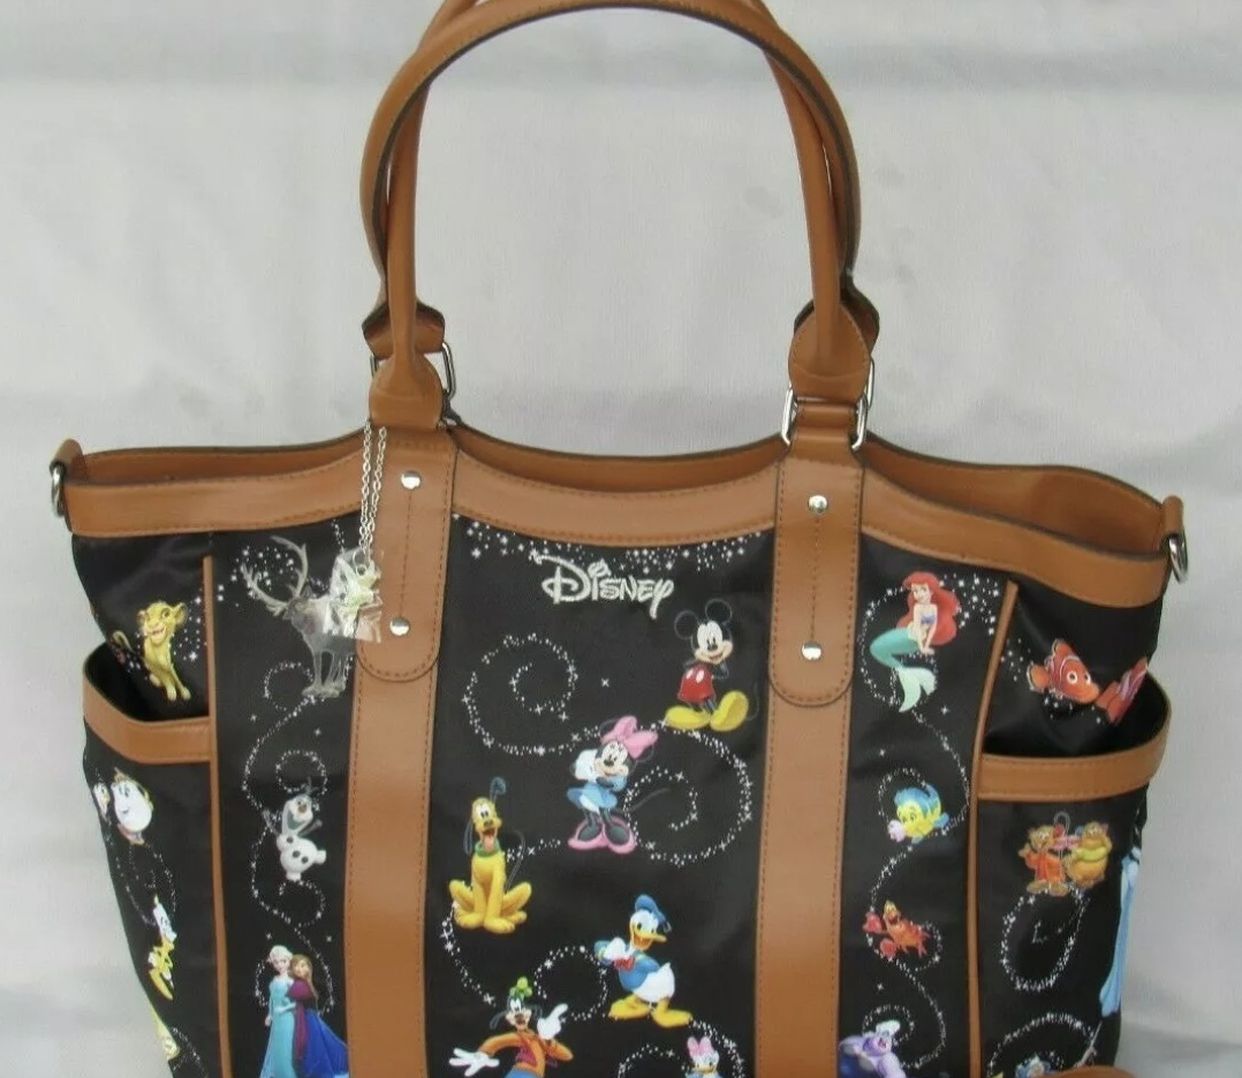 Disney Tote Bag By The Bradford Exchange